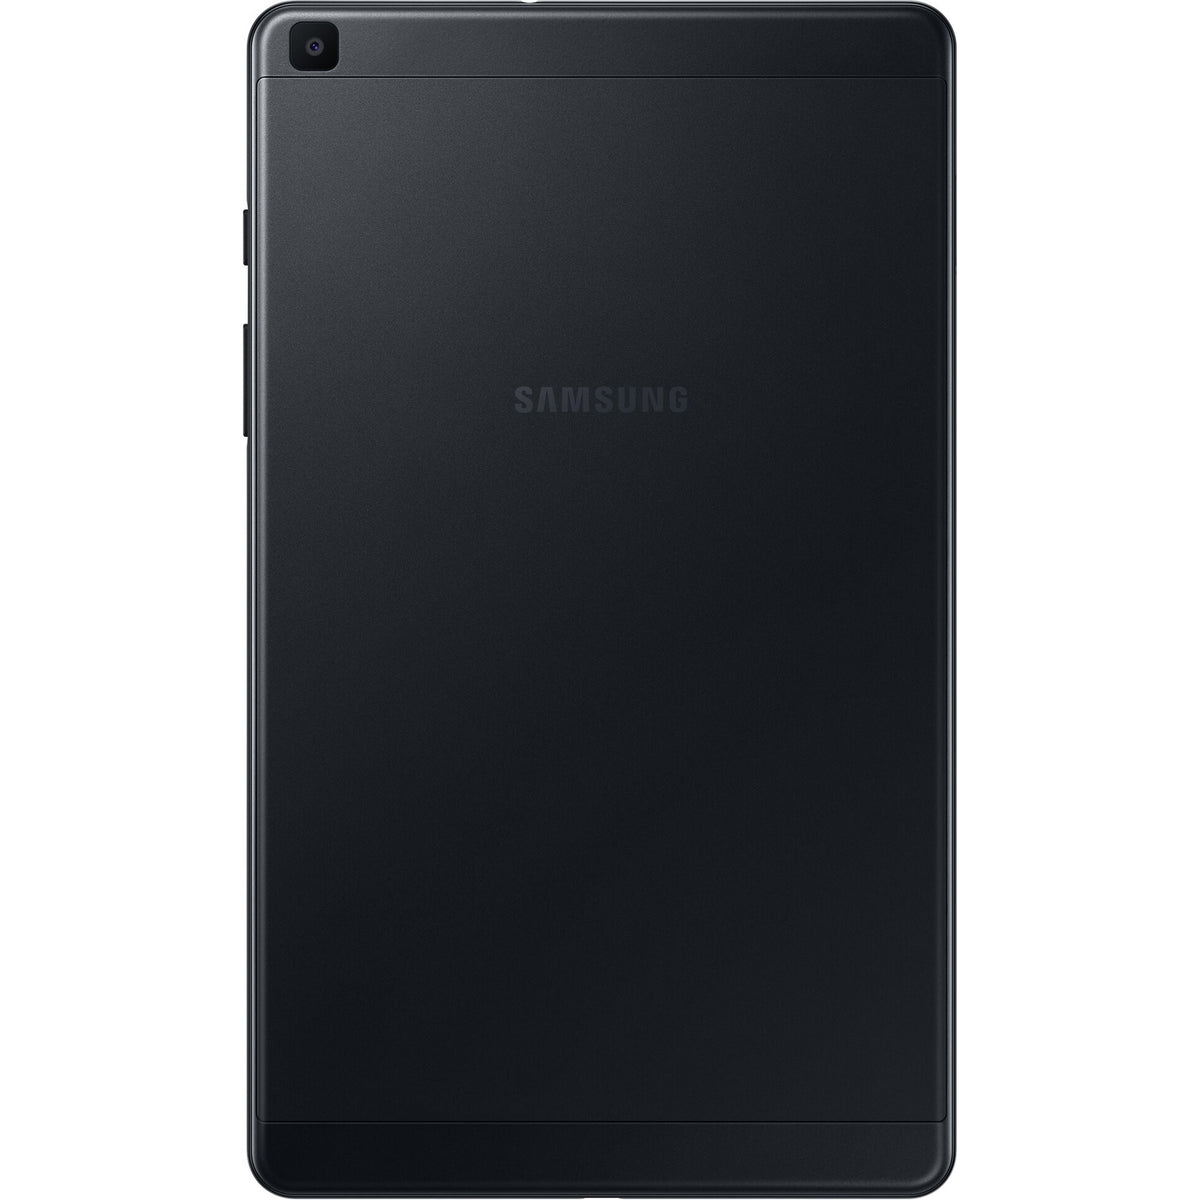 Tablet Samsung Galaxy A 8.0 SM T290 32GB, černá